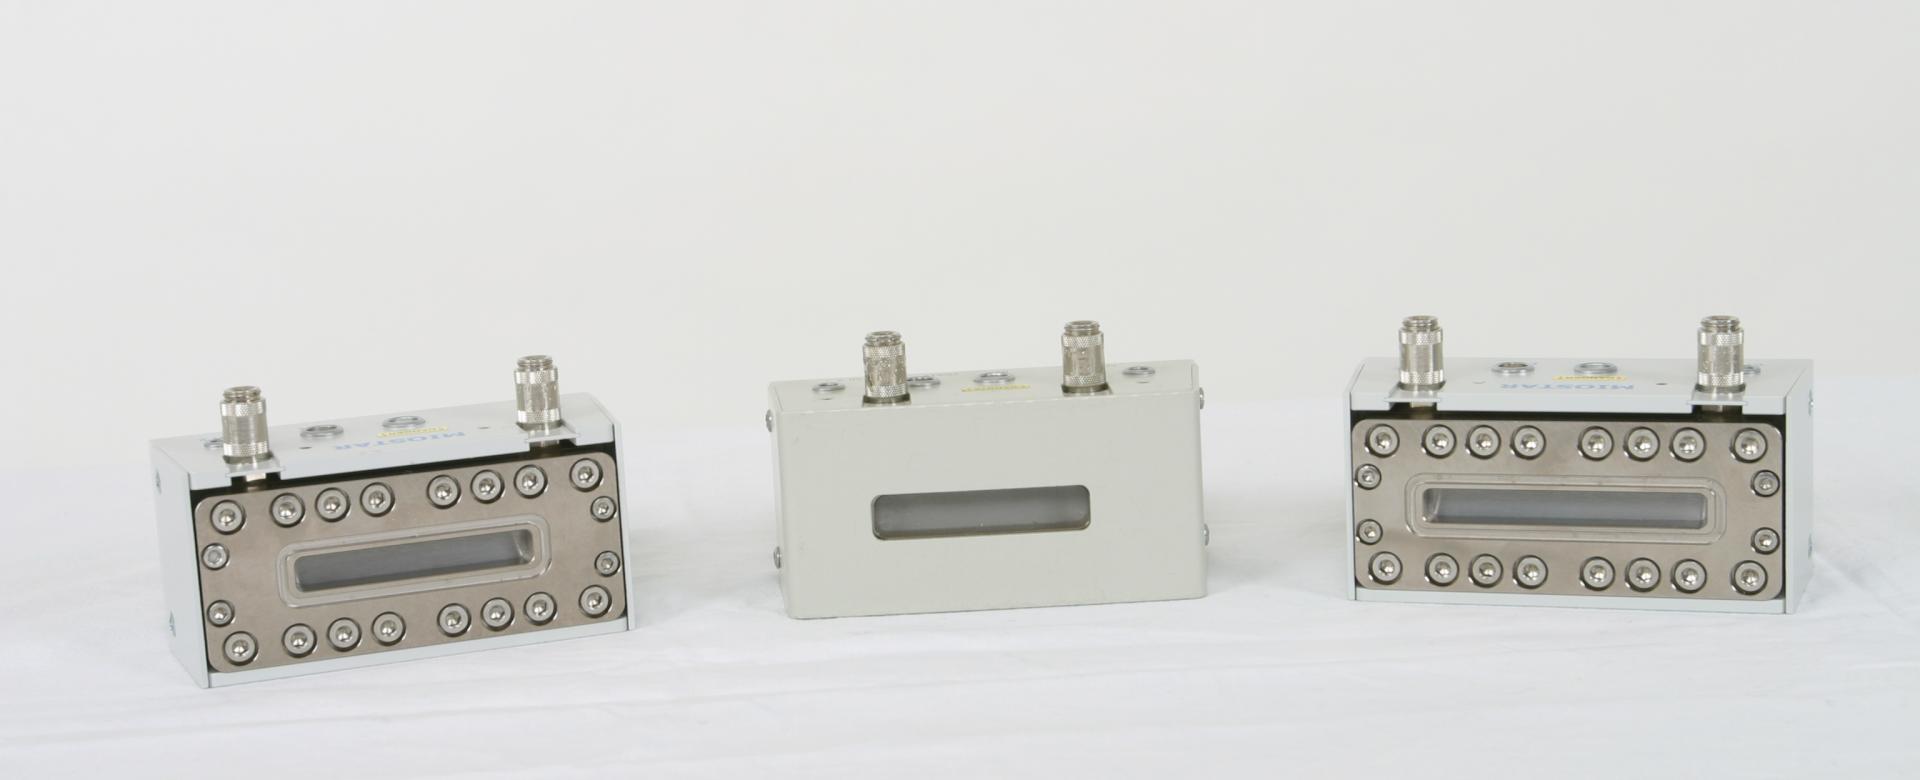 different types of MioStarI detectors